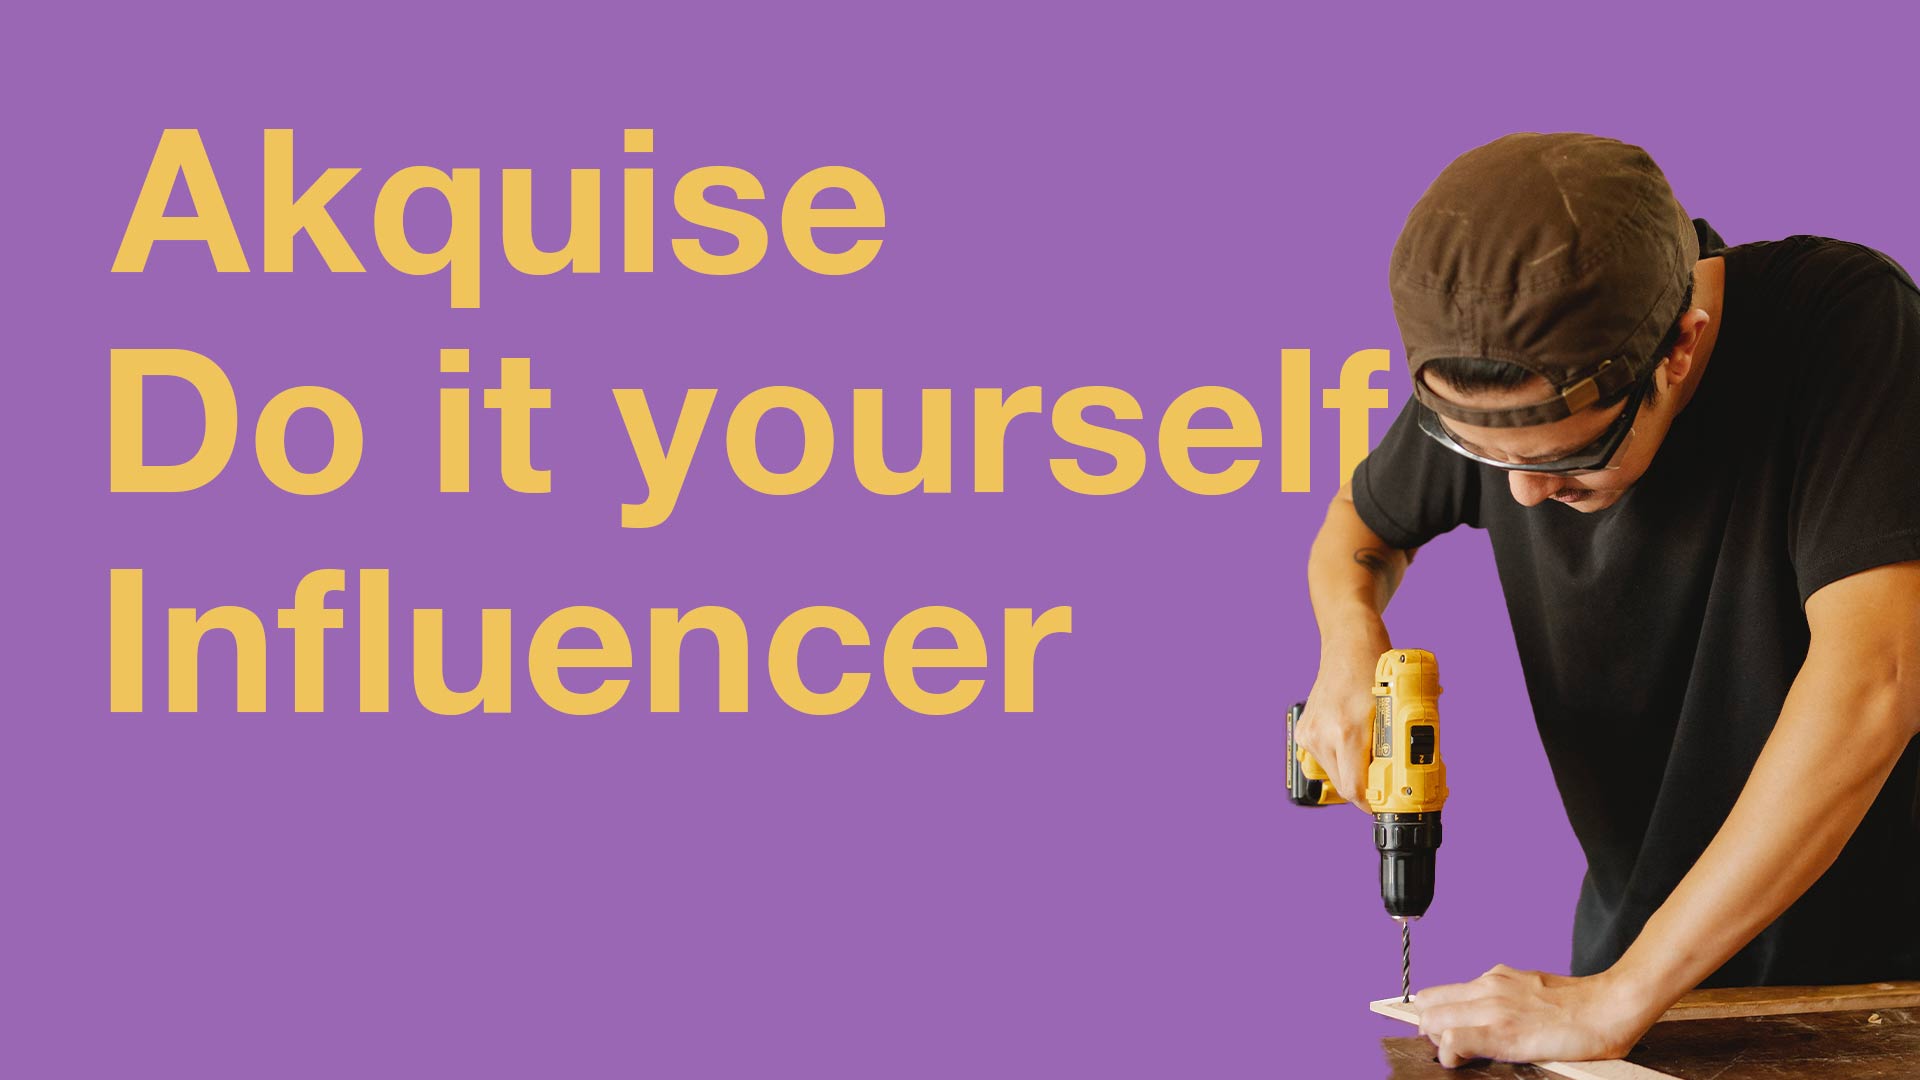 DIY (Do-it-yourself ) Influencer Marketing